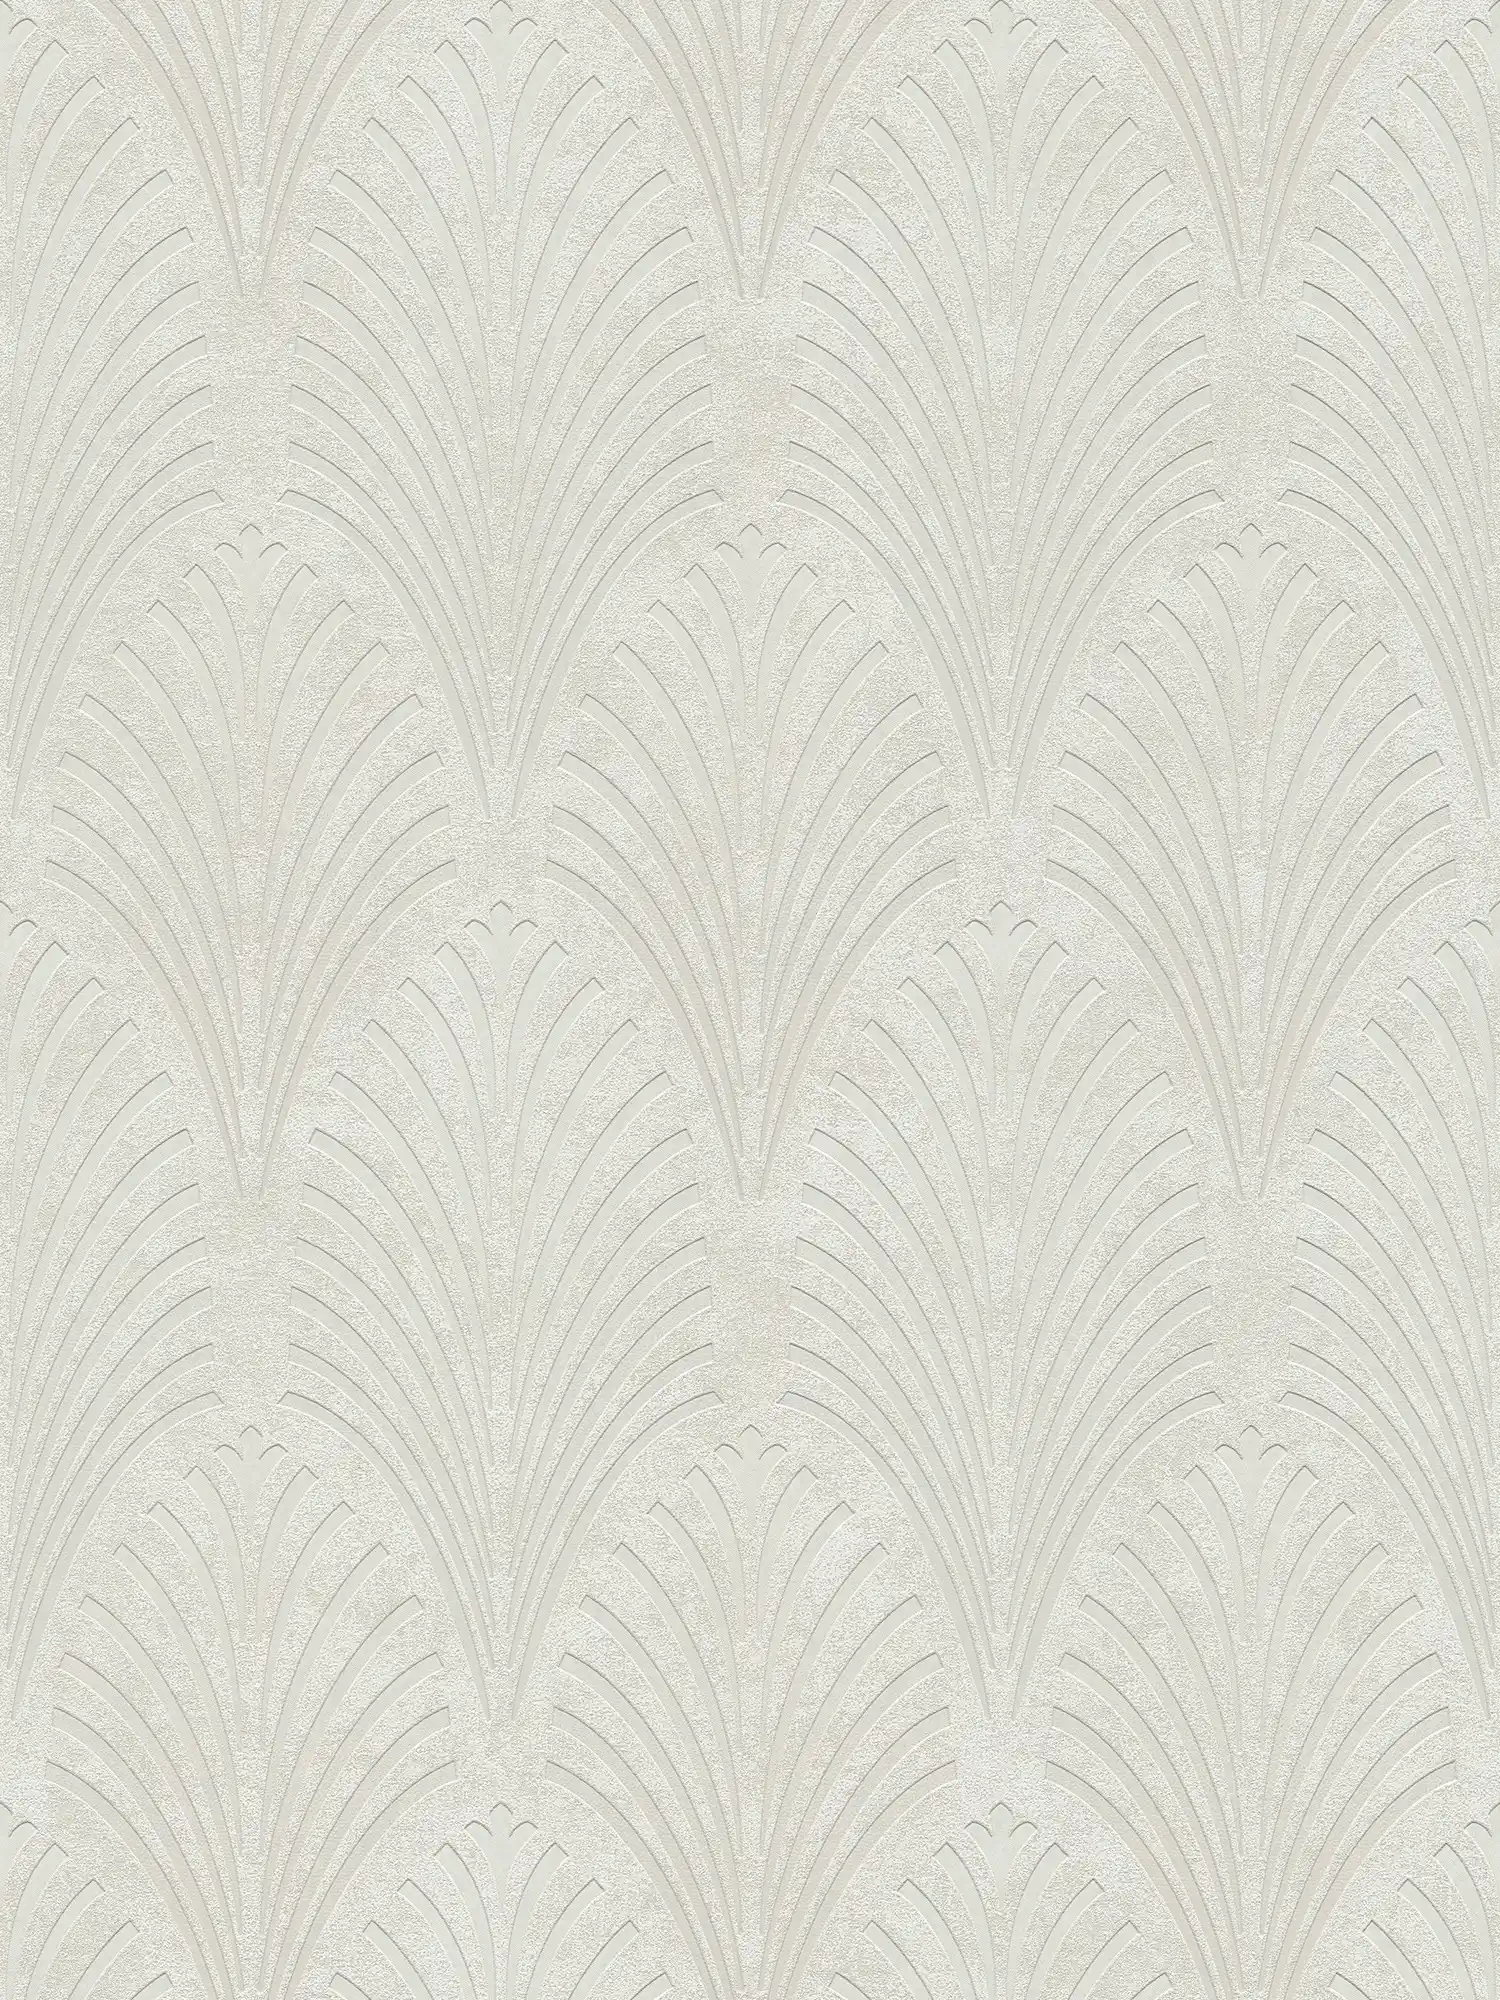 Retro wallpaper Art Deco style with geometric pattern - cream, grey, beige
